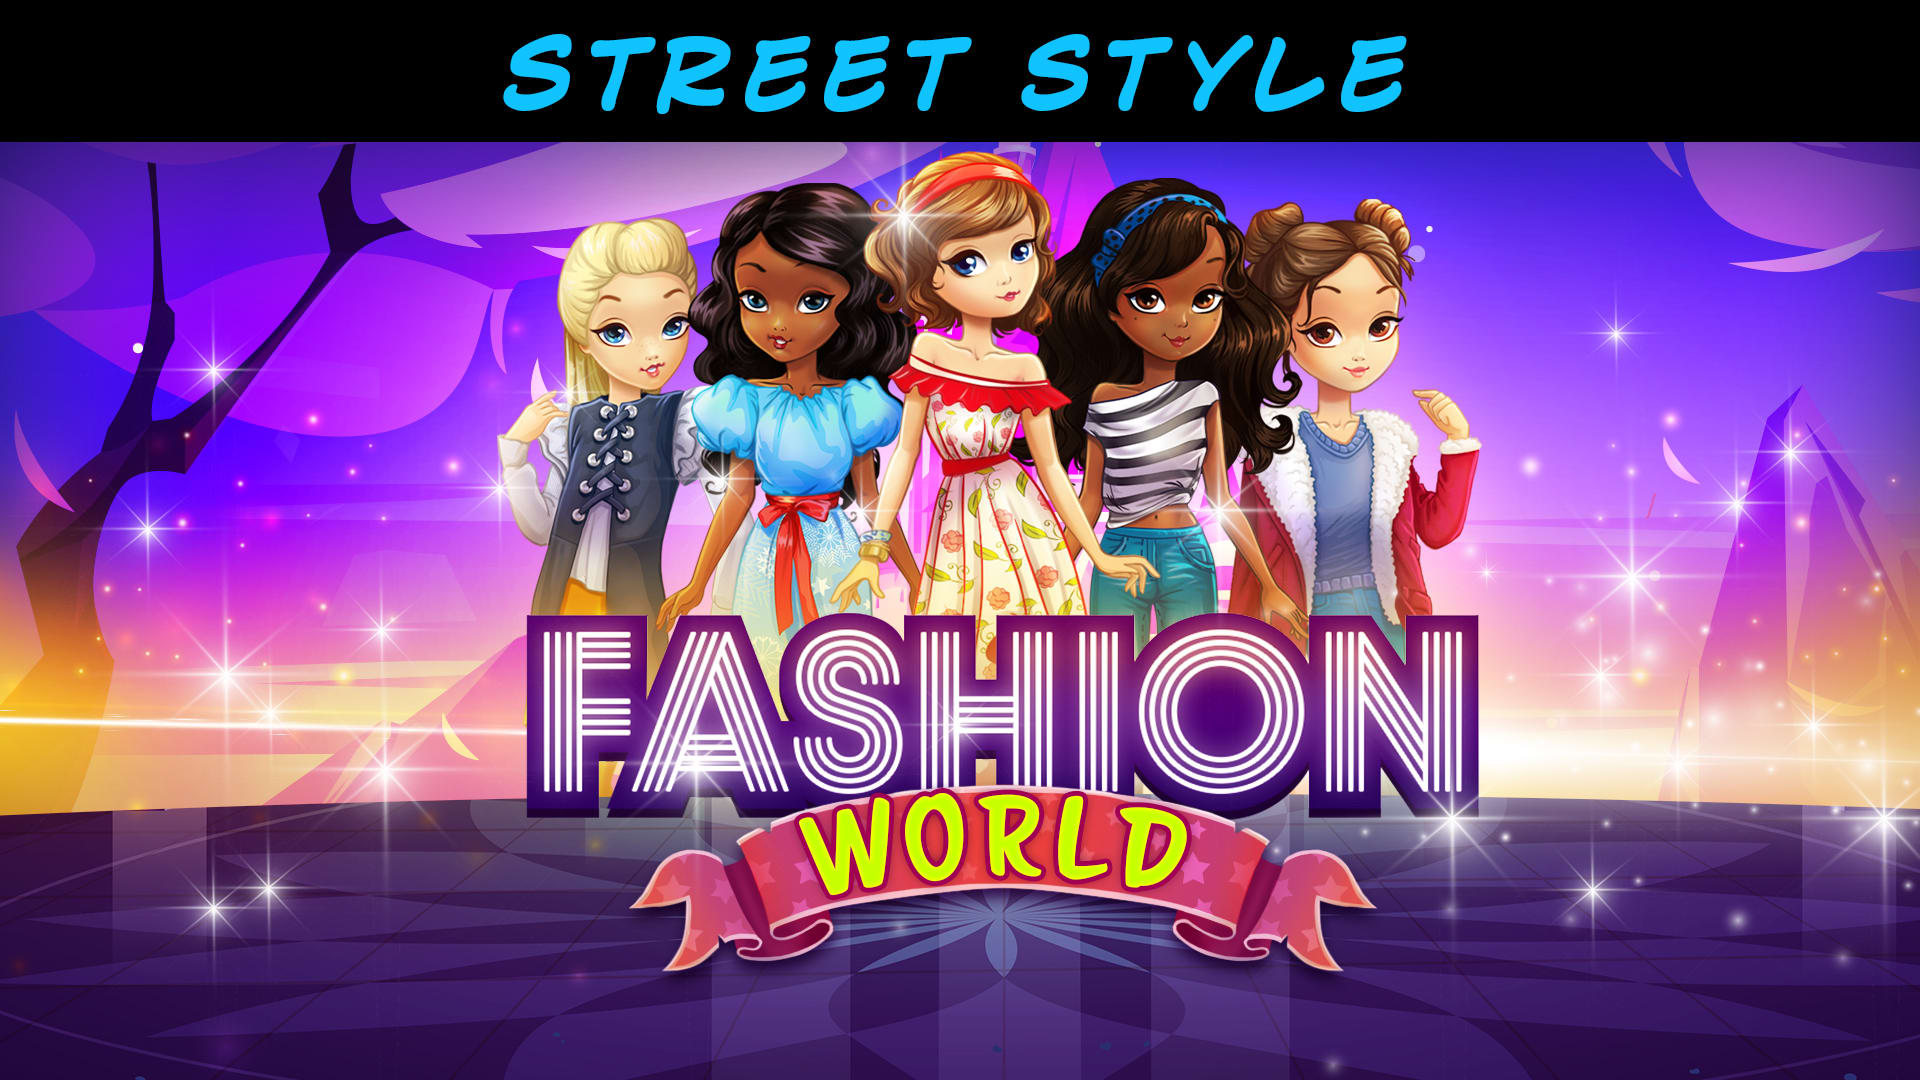 Fashion World DLC 2: Street Style